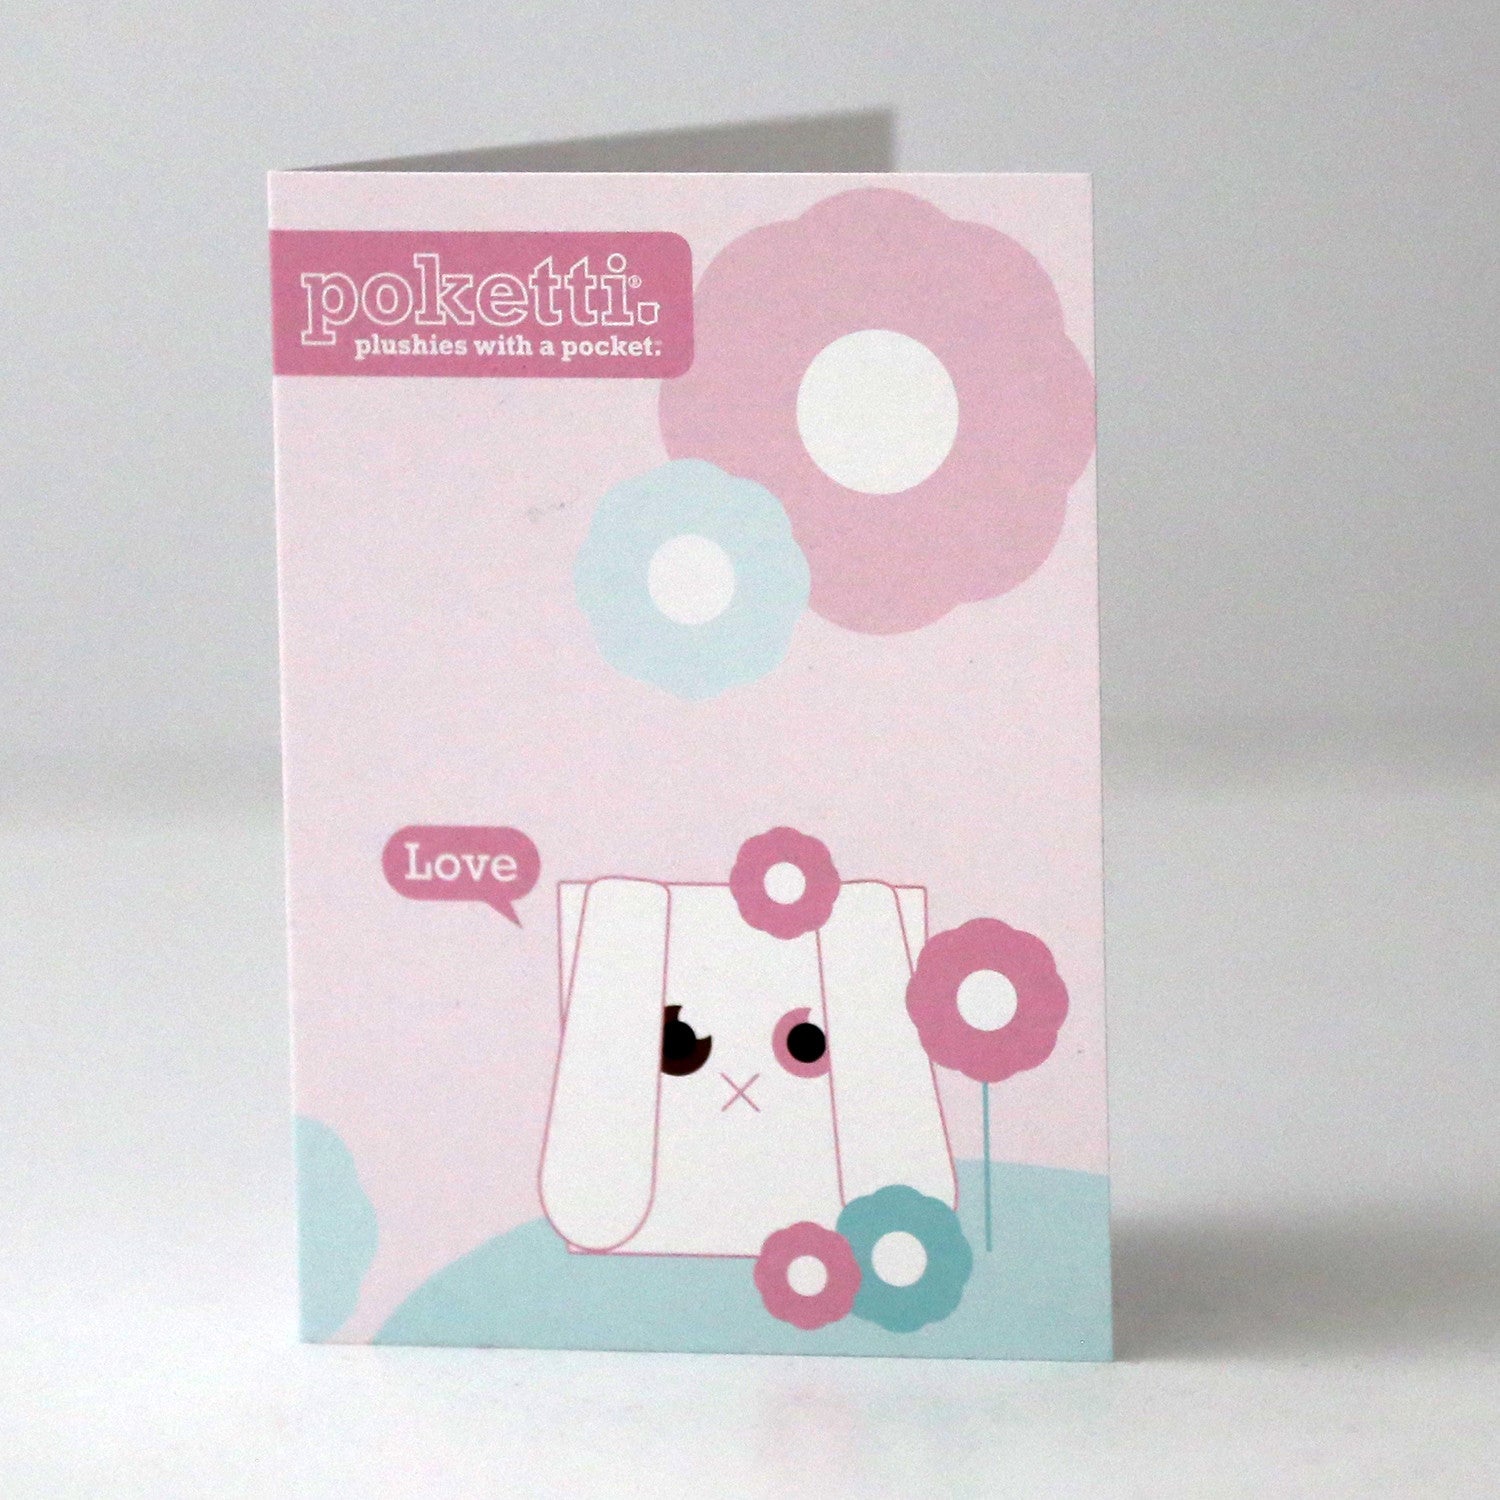 Poketti Bunny Rabbit Plush Pillow with a Pocket- Free Greeting Card